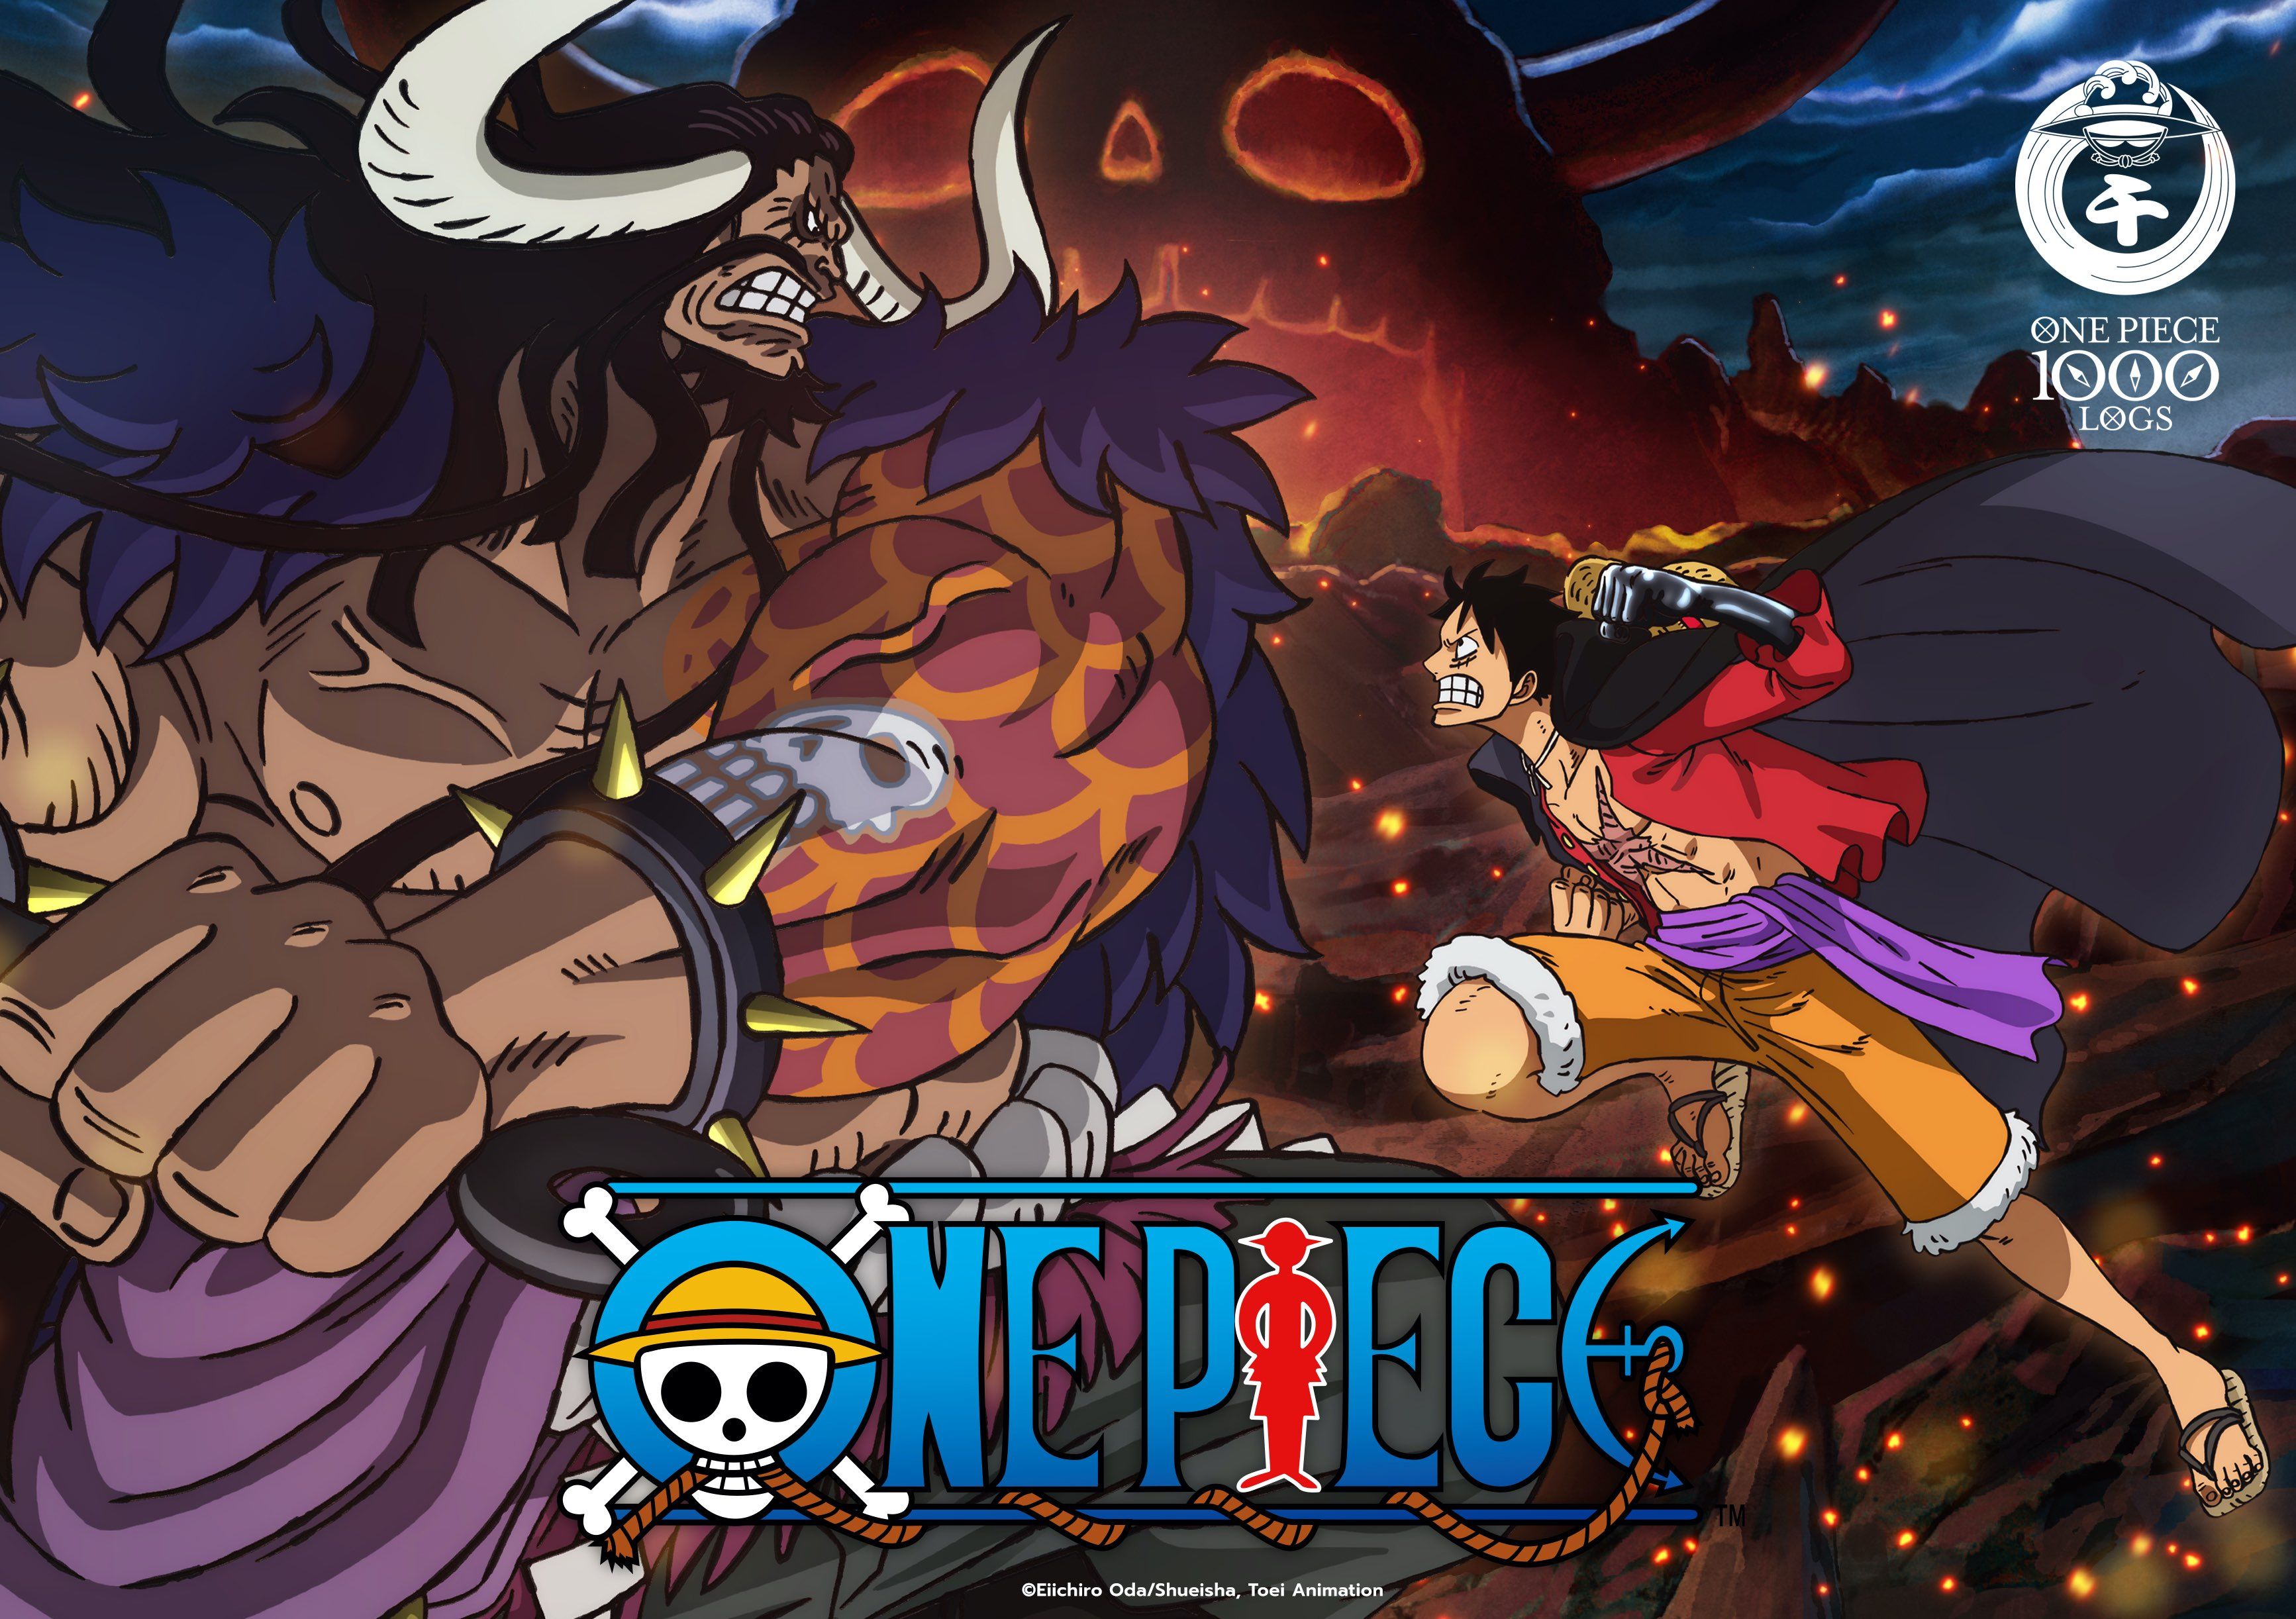 Baca Komik One Piece Chapter 1028 Bahasa Indonesia Teknik Baru Zoro Hingga Habisnya Kekuatan Kaido Mantra Sukabumi